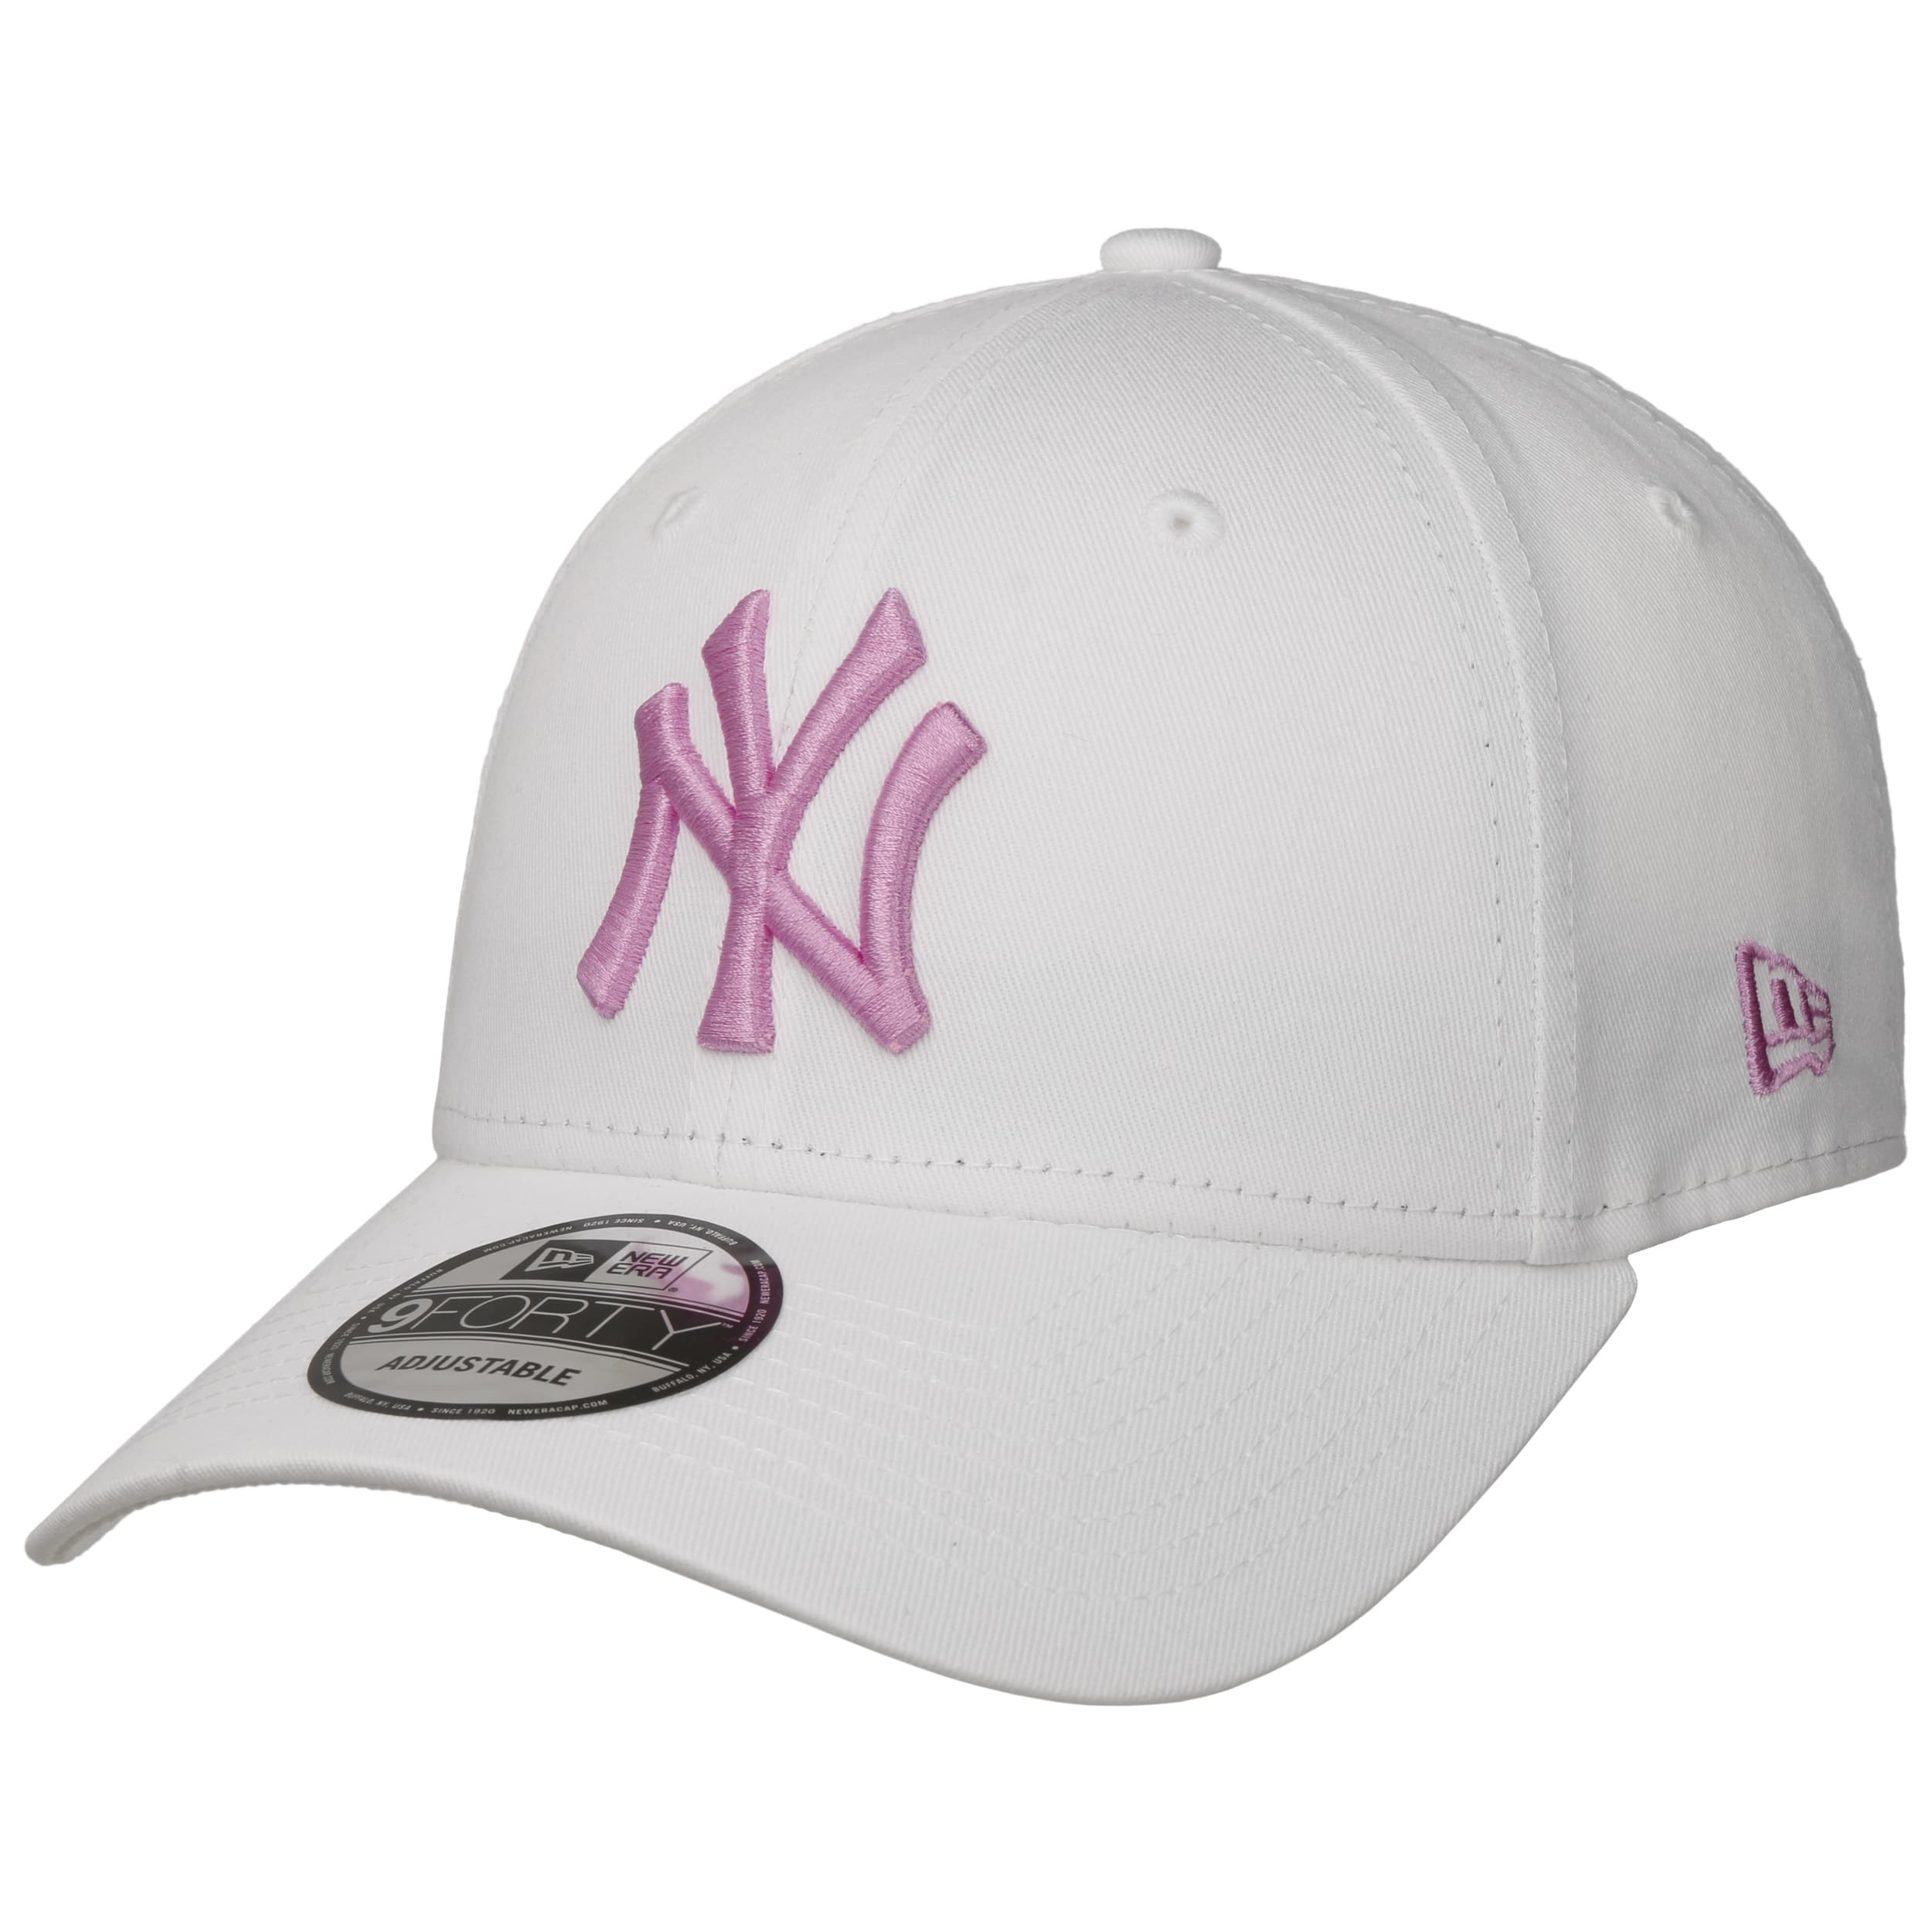 Yankees Kids Pink Adjustable Cap